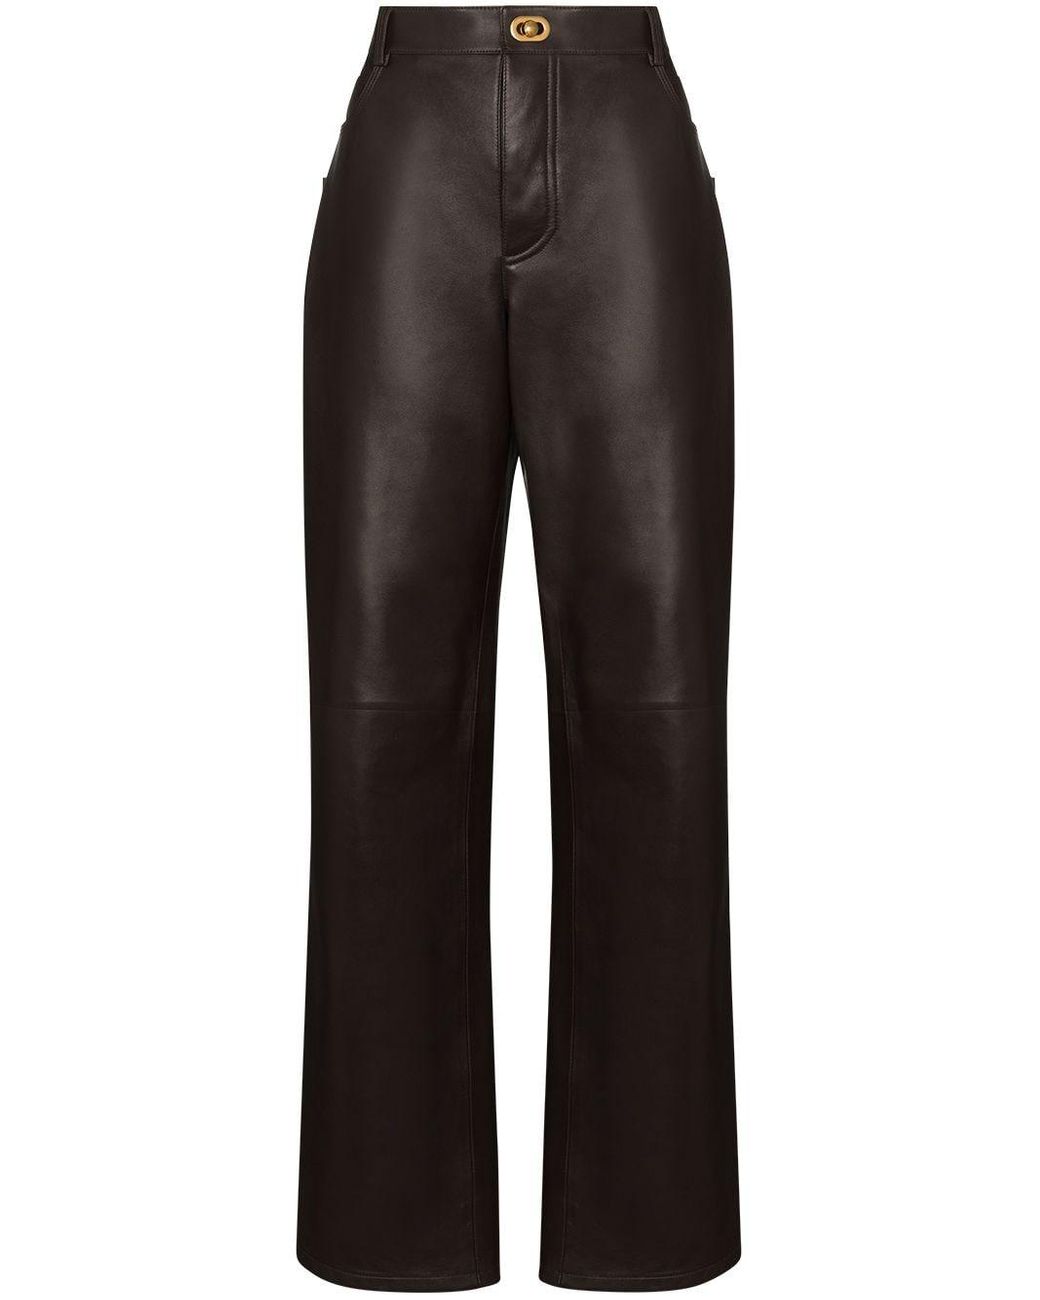 Bottega Veneta Leather Straight Leg Trousers in Brown - Lyst